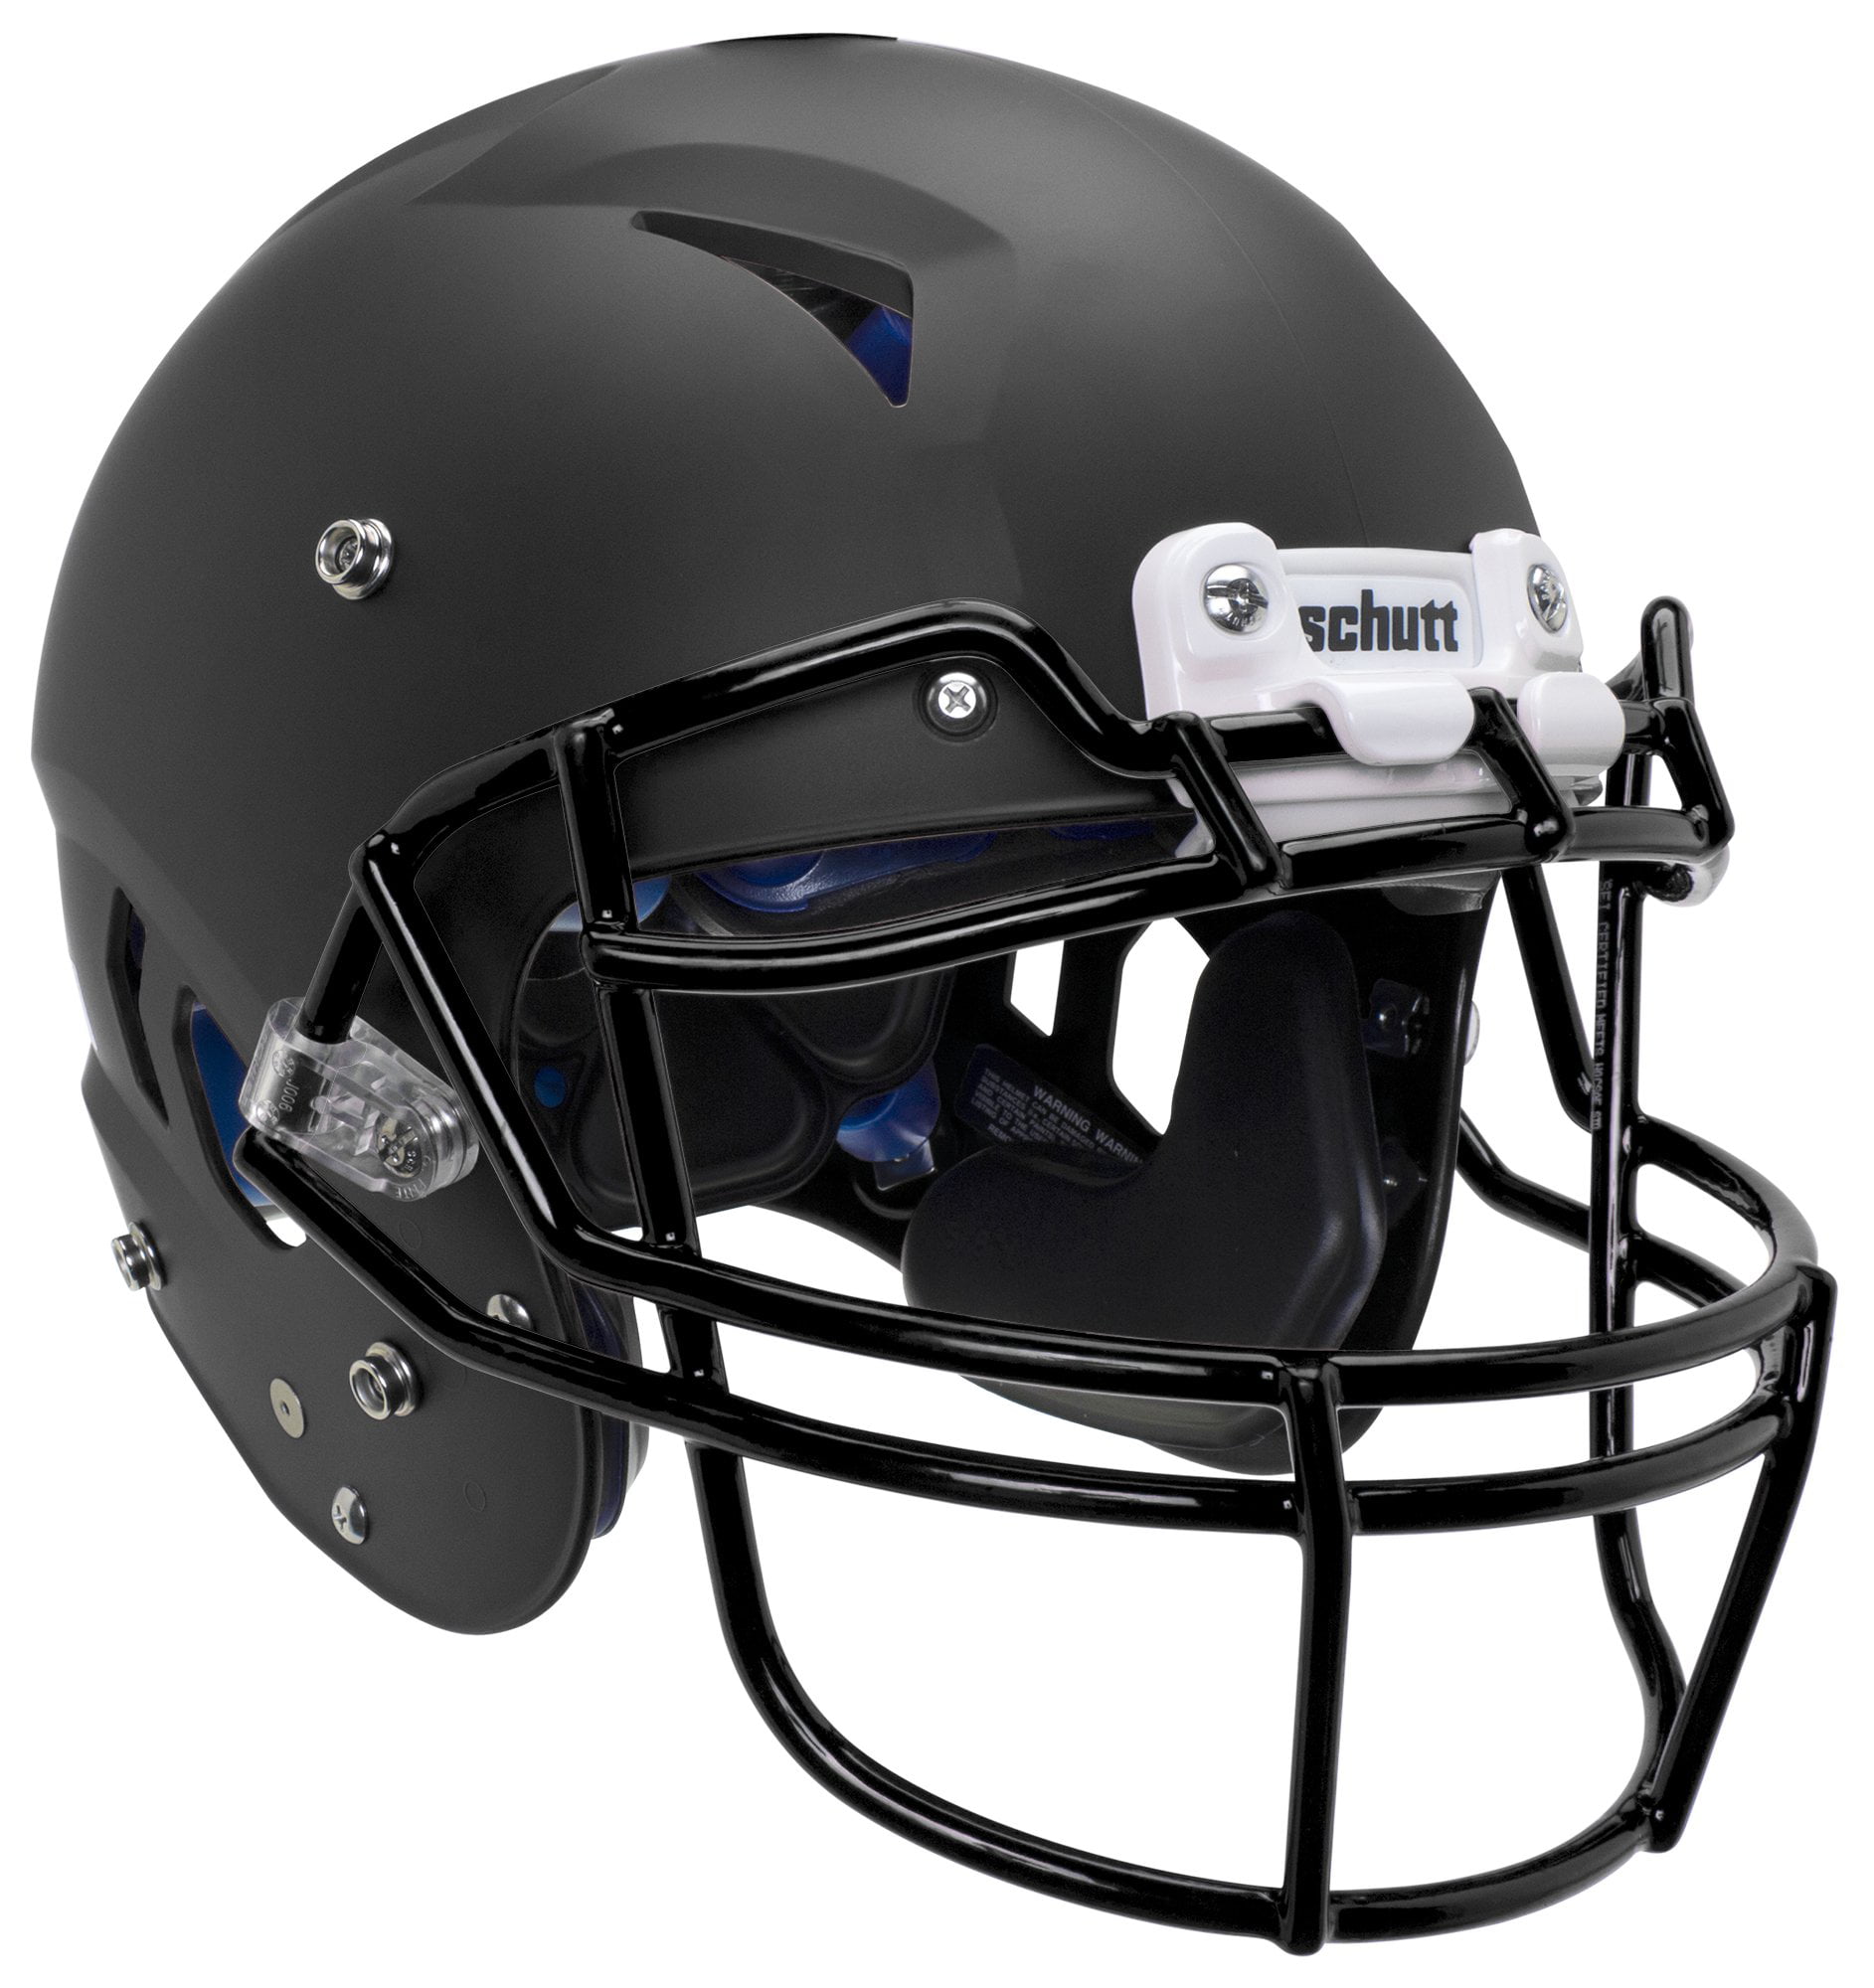 Schutt Vengeance Pro LTD Adult Football Helmet - Walmart.com